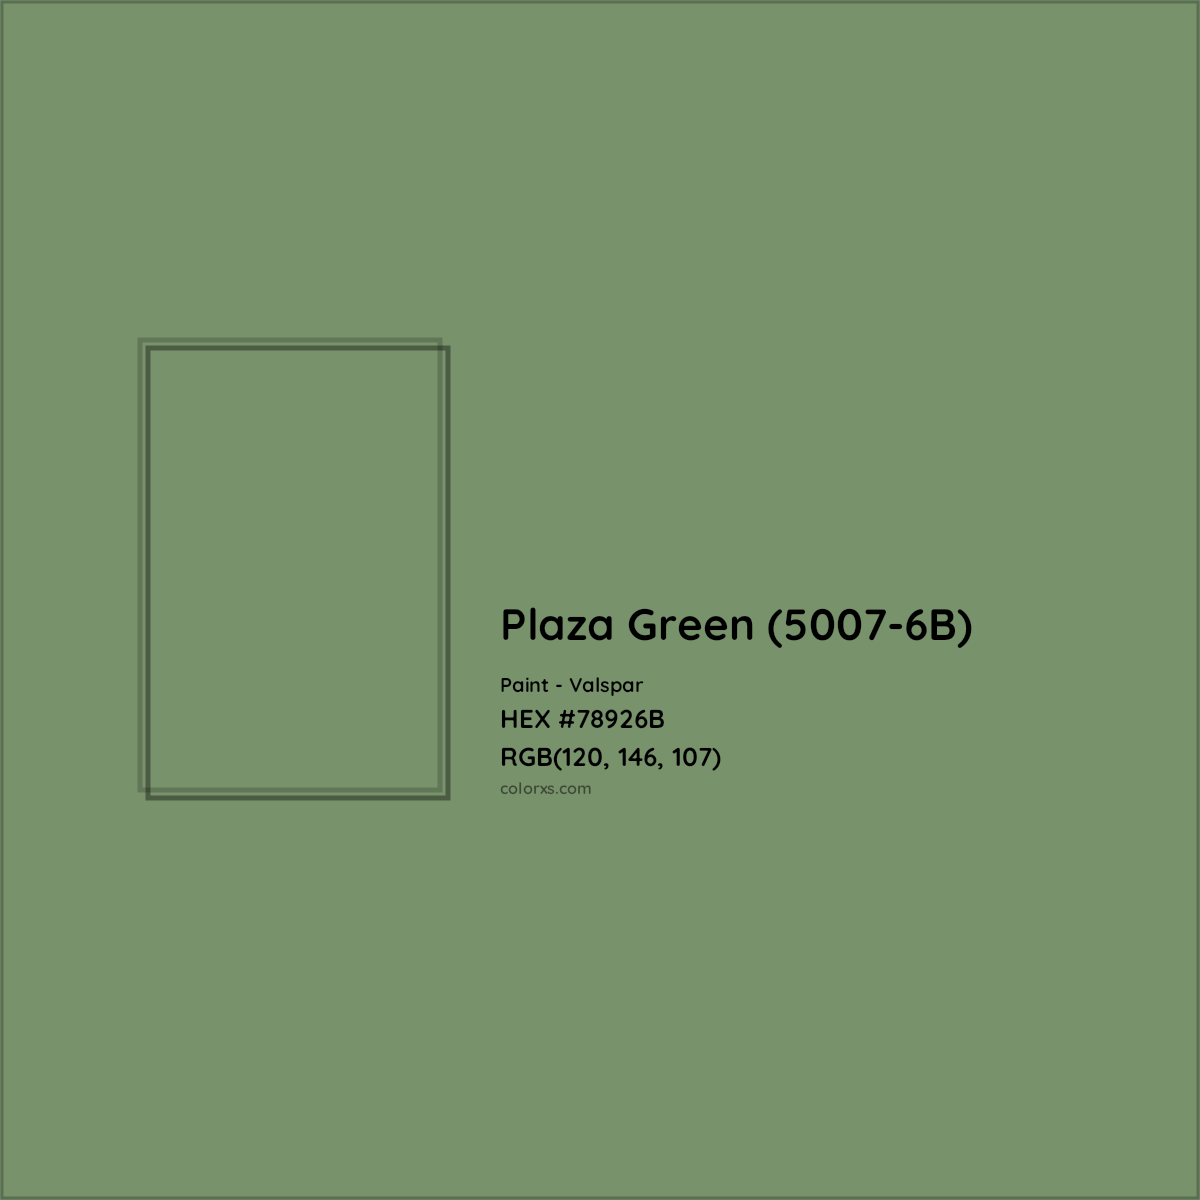 HEX #78926B Plaza Green (5007-6B) Paint Valspar - Color Code